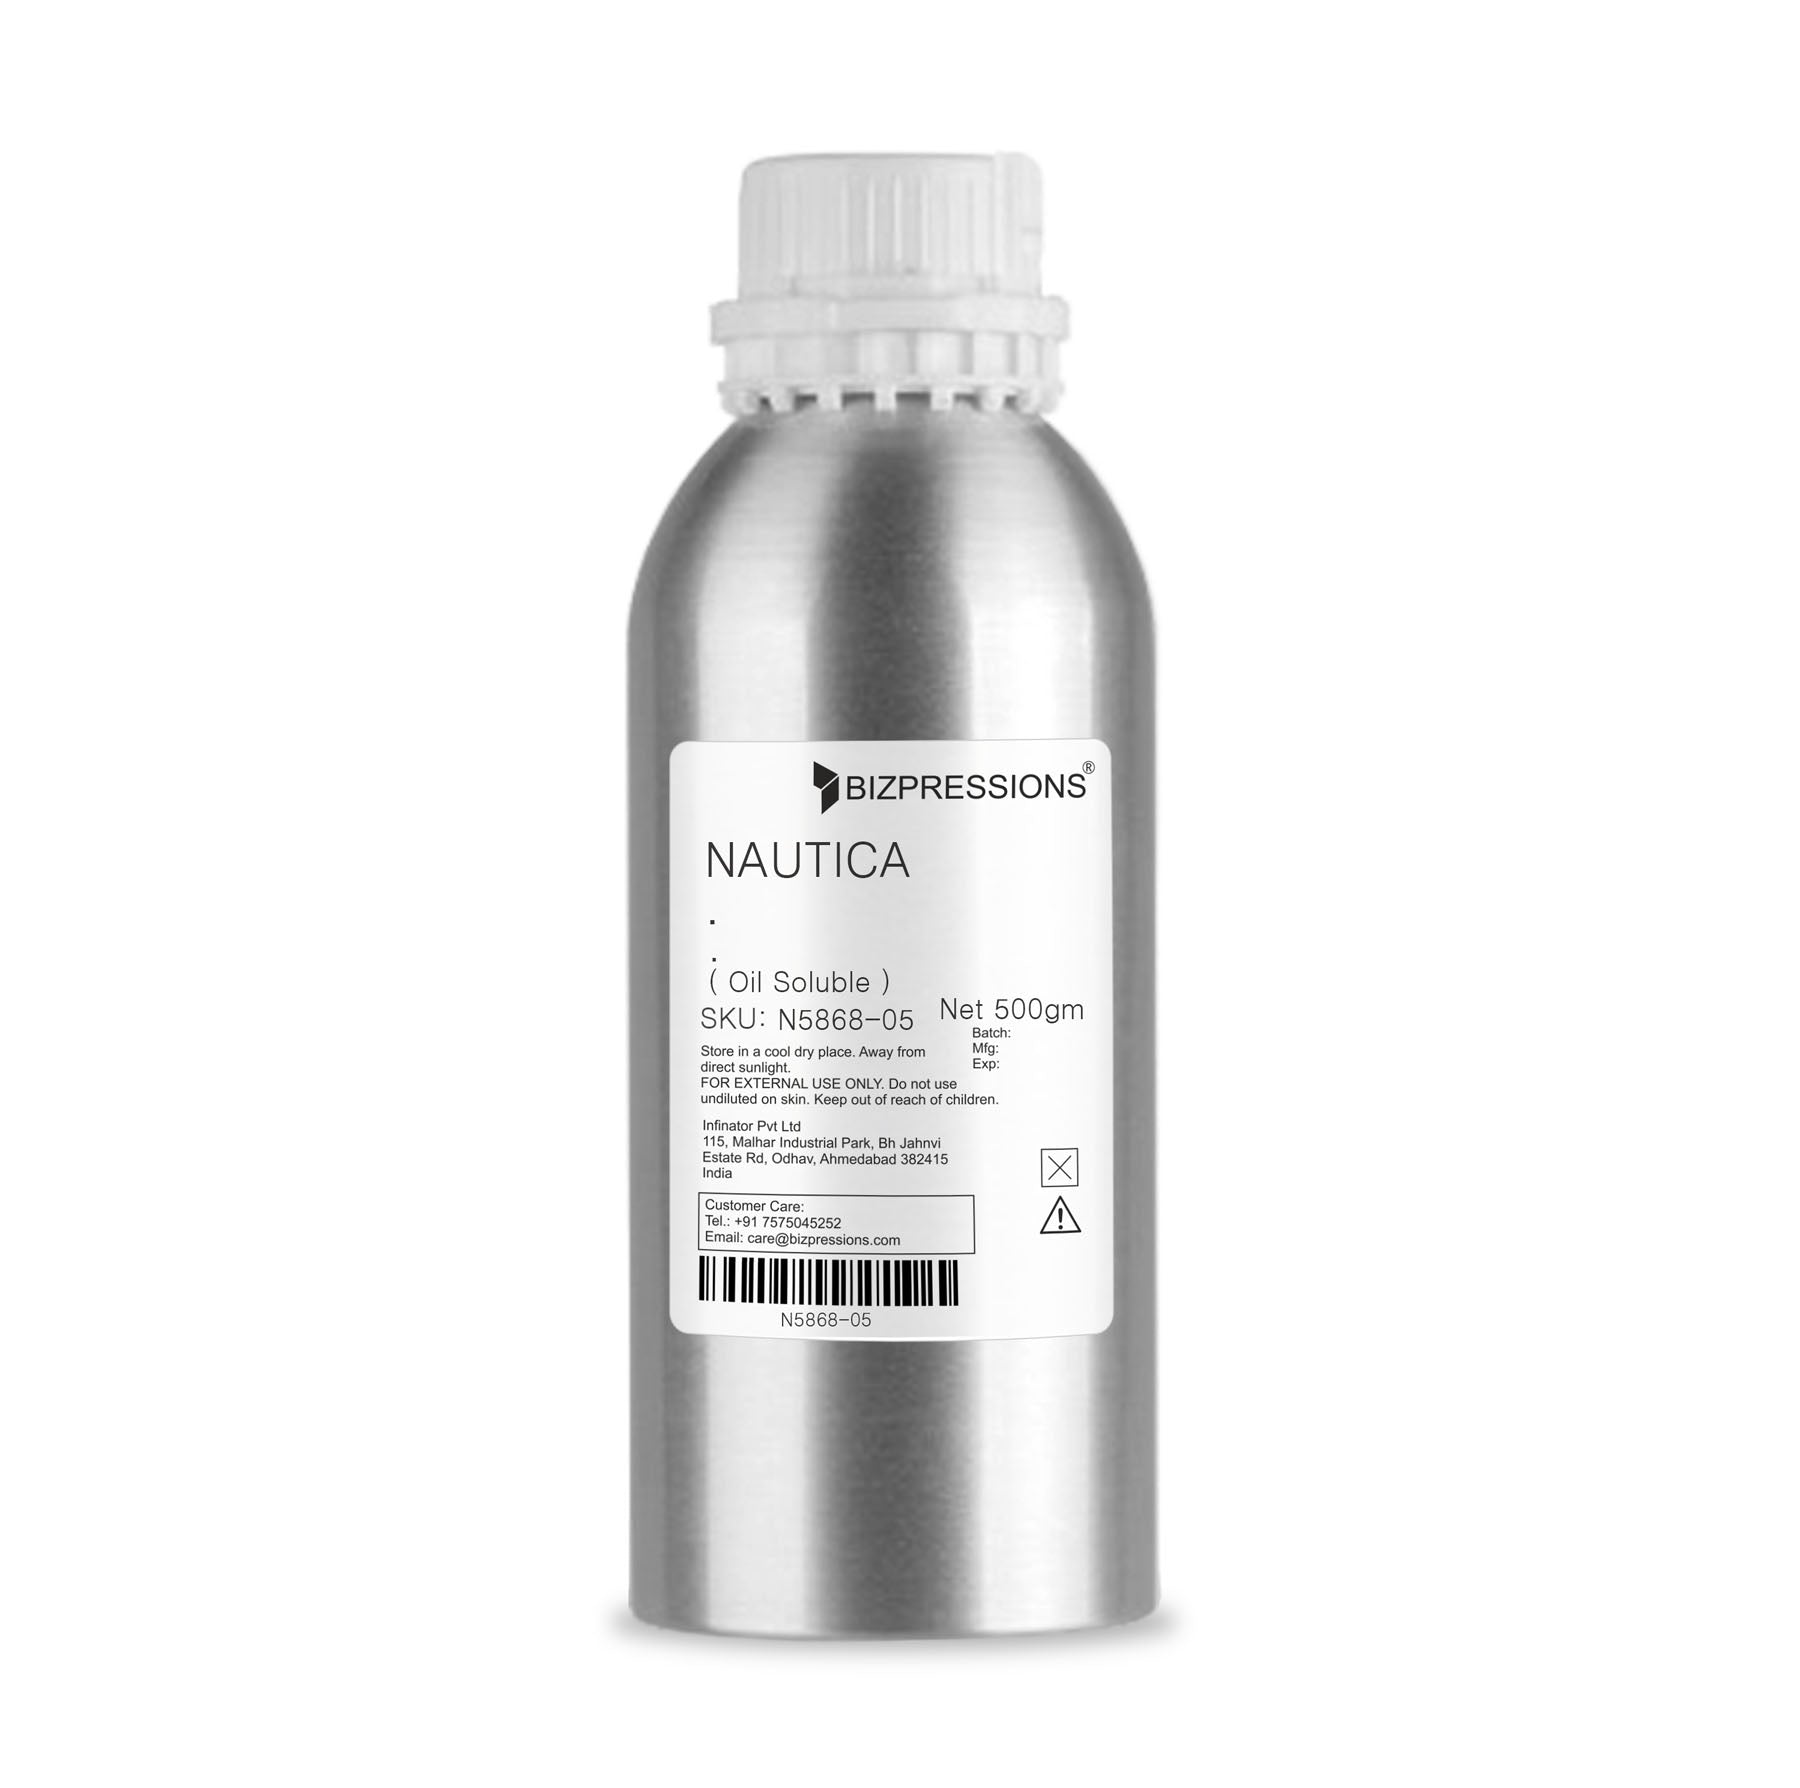 NAUTICA - Fragrance ( Oil Soluble ) - 500 gm